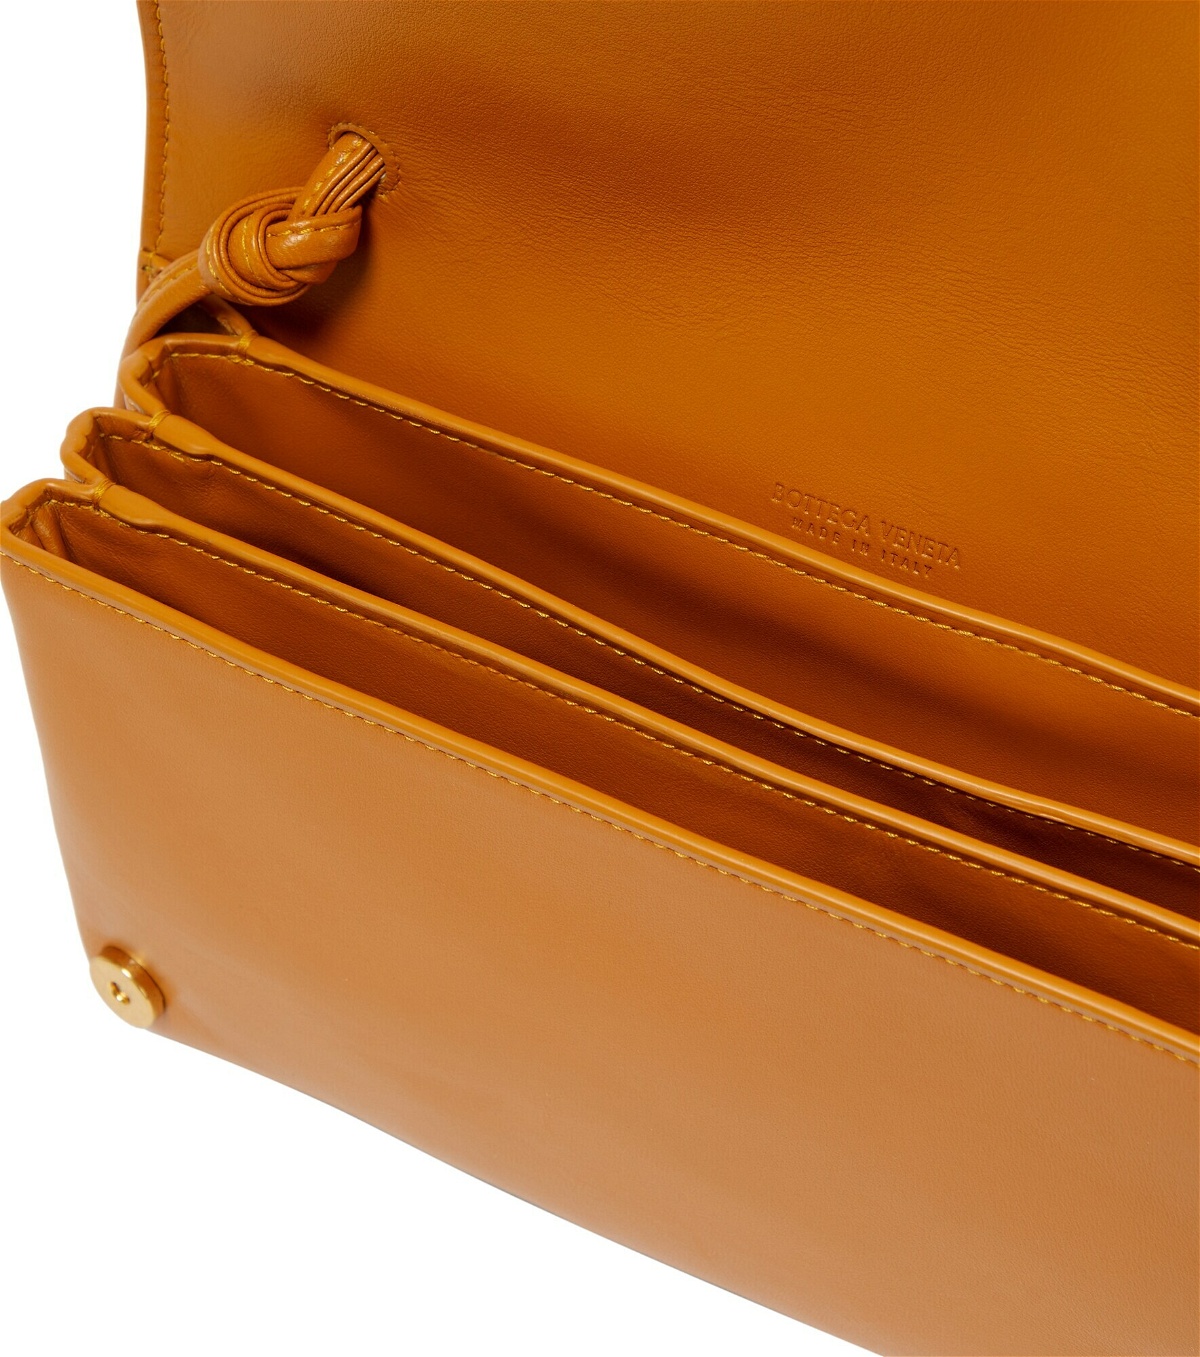 Bottega Veneta Trio Pouch Intrecciato Leather Shoulder Bag Black-Gold